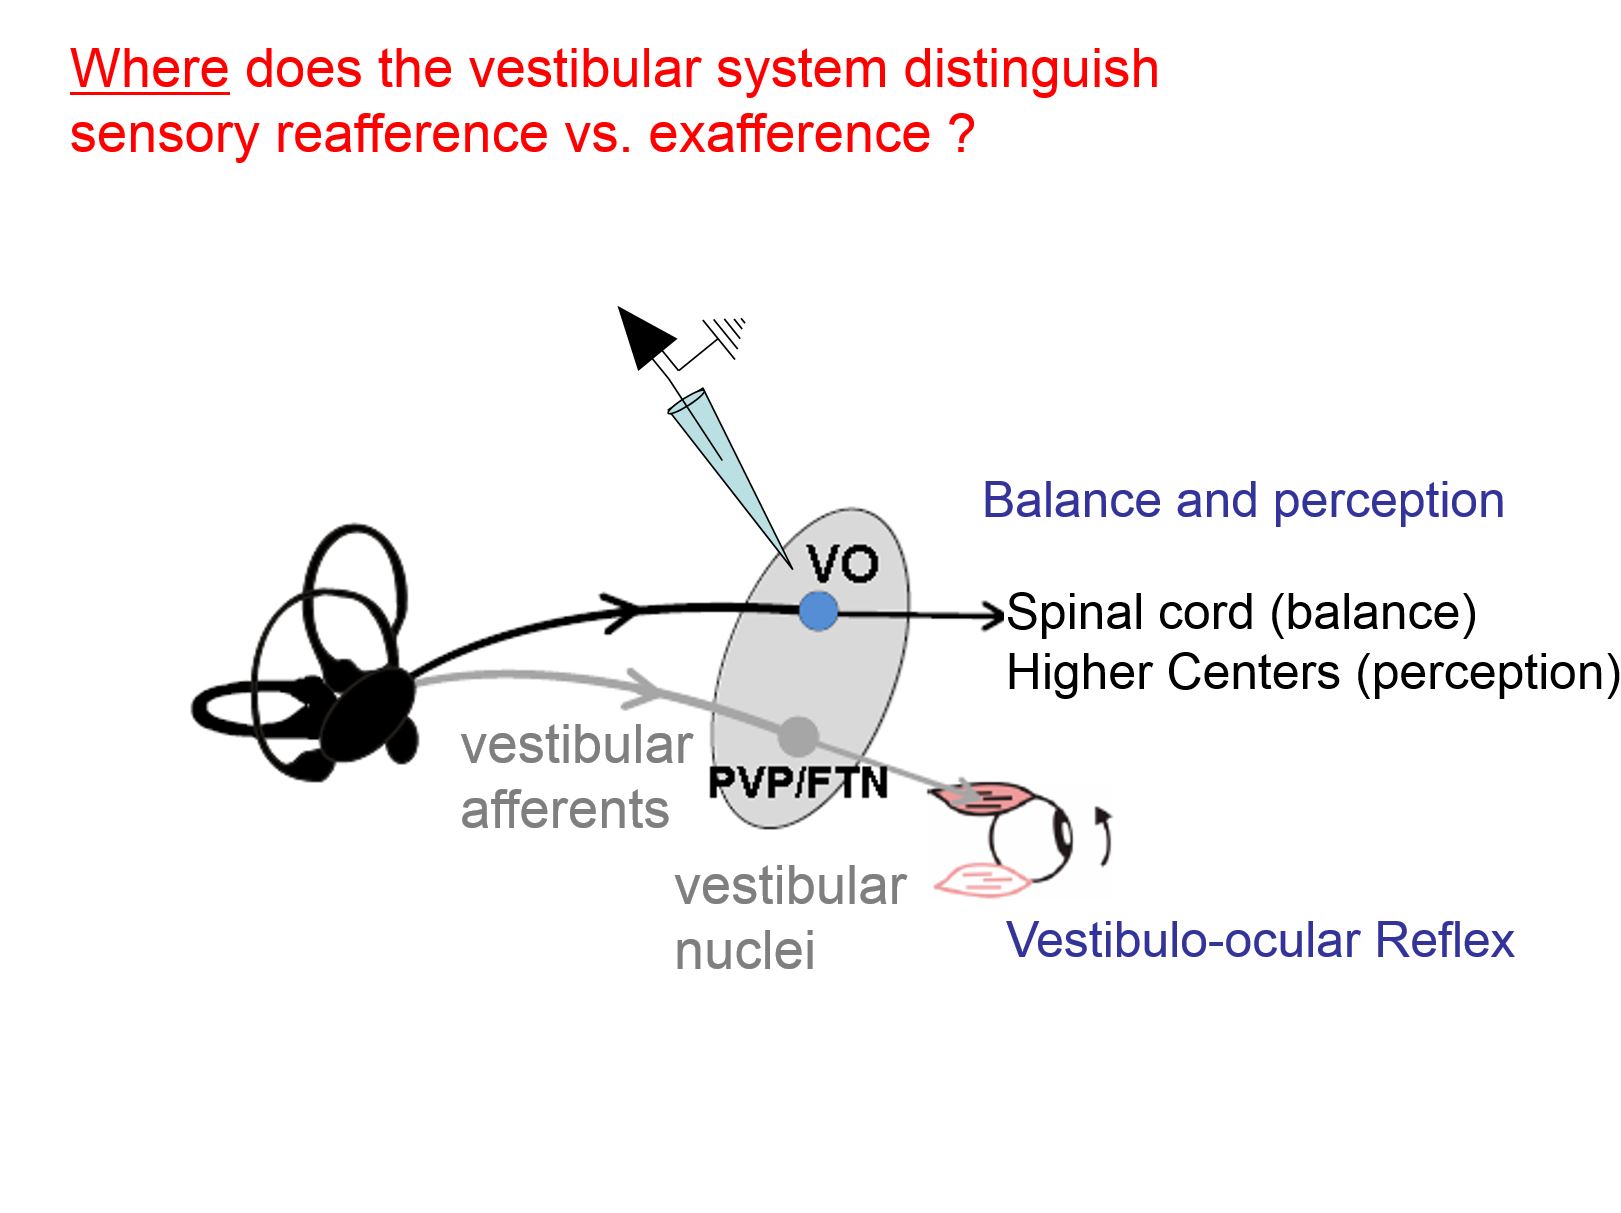 Where does the vestibular system distinguish sensory reafference vs exafference?